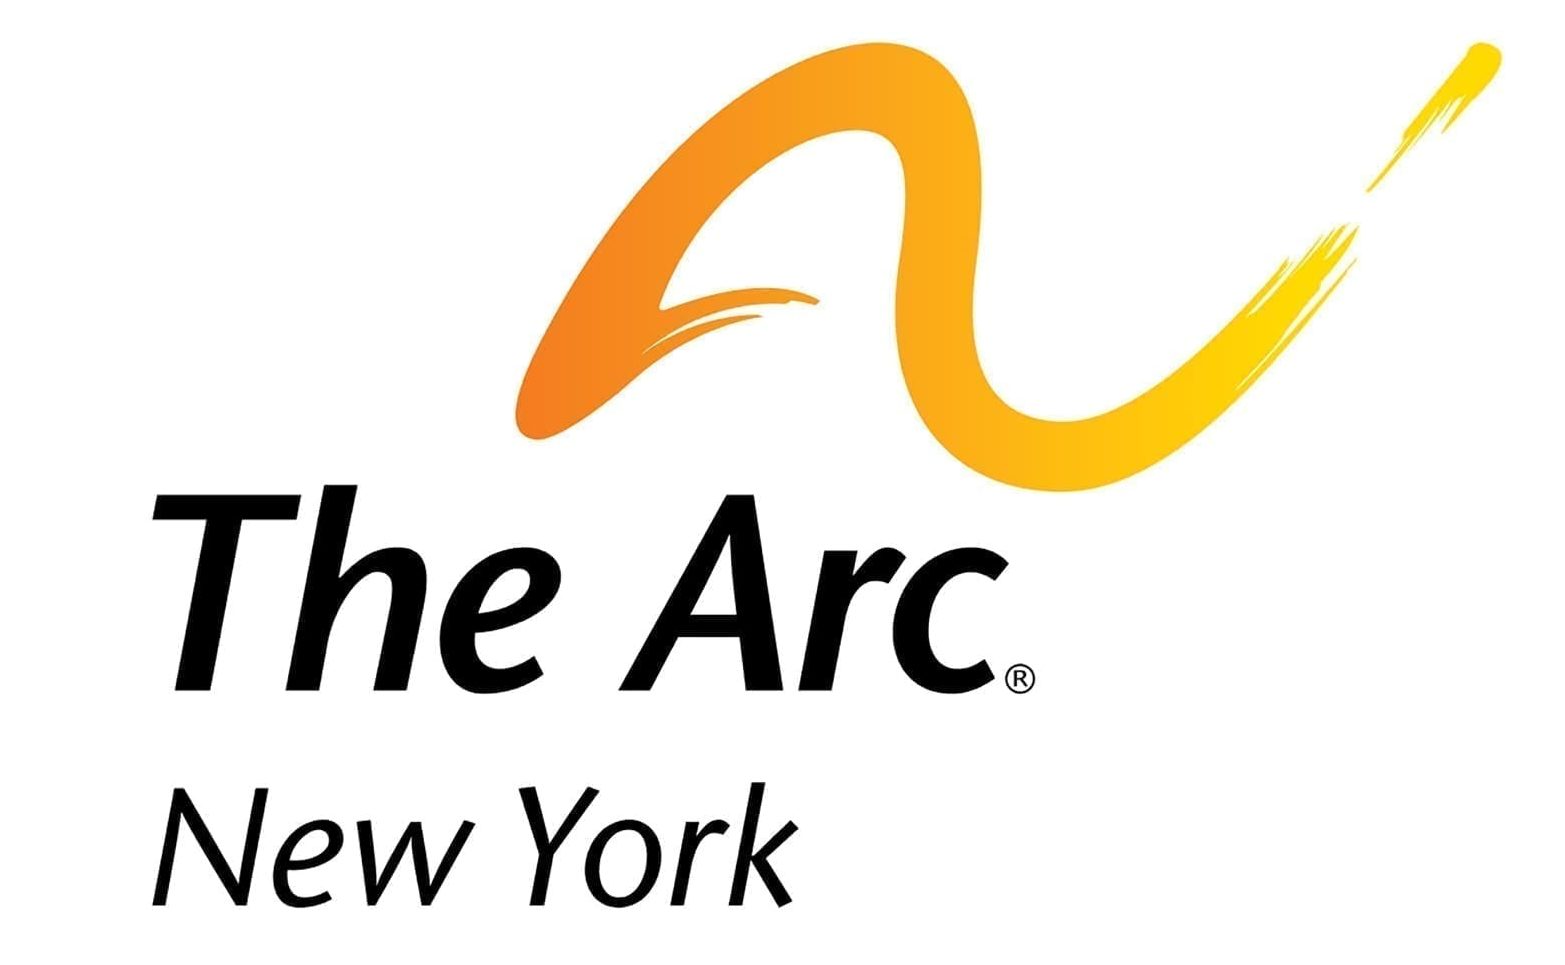 The Arc New York